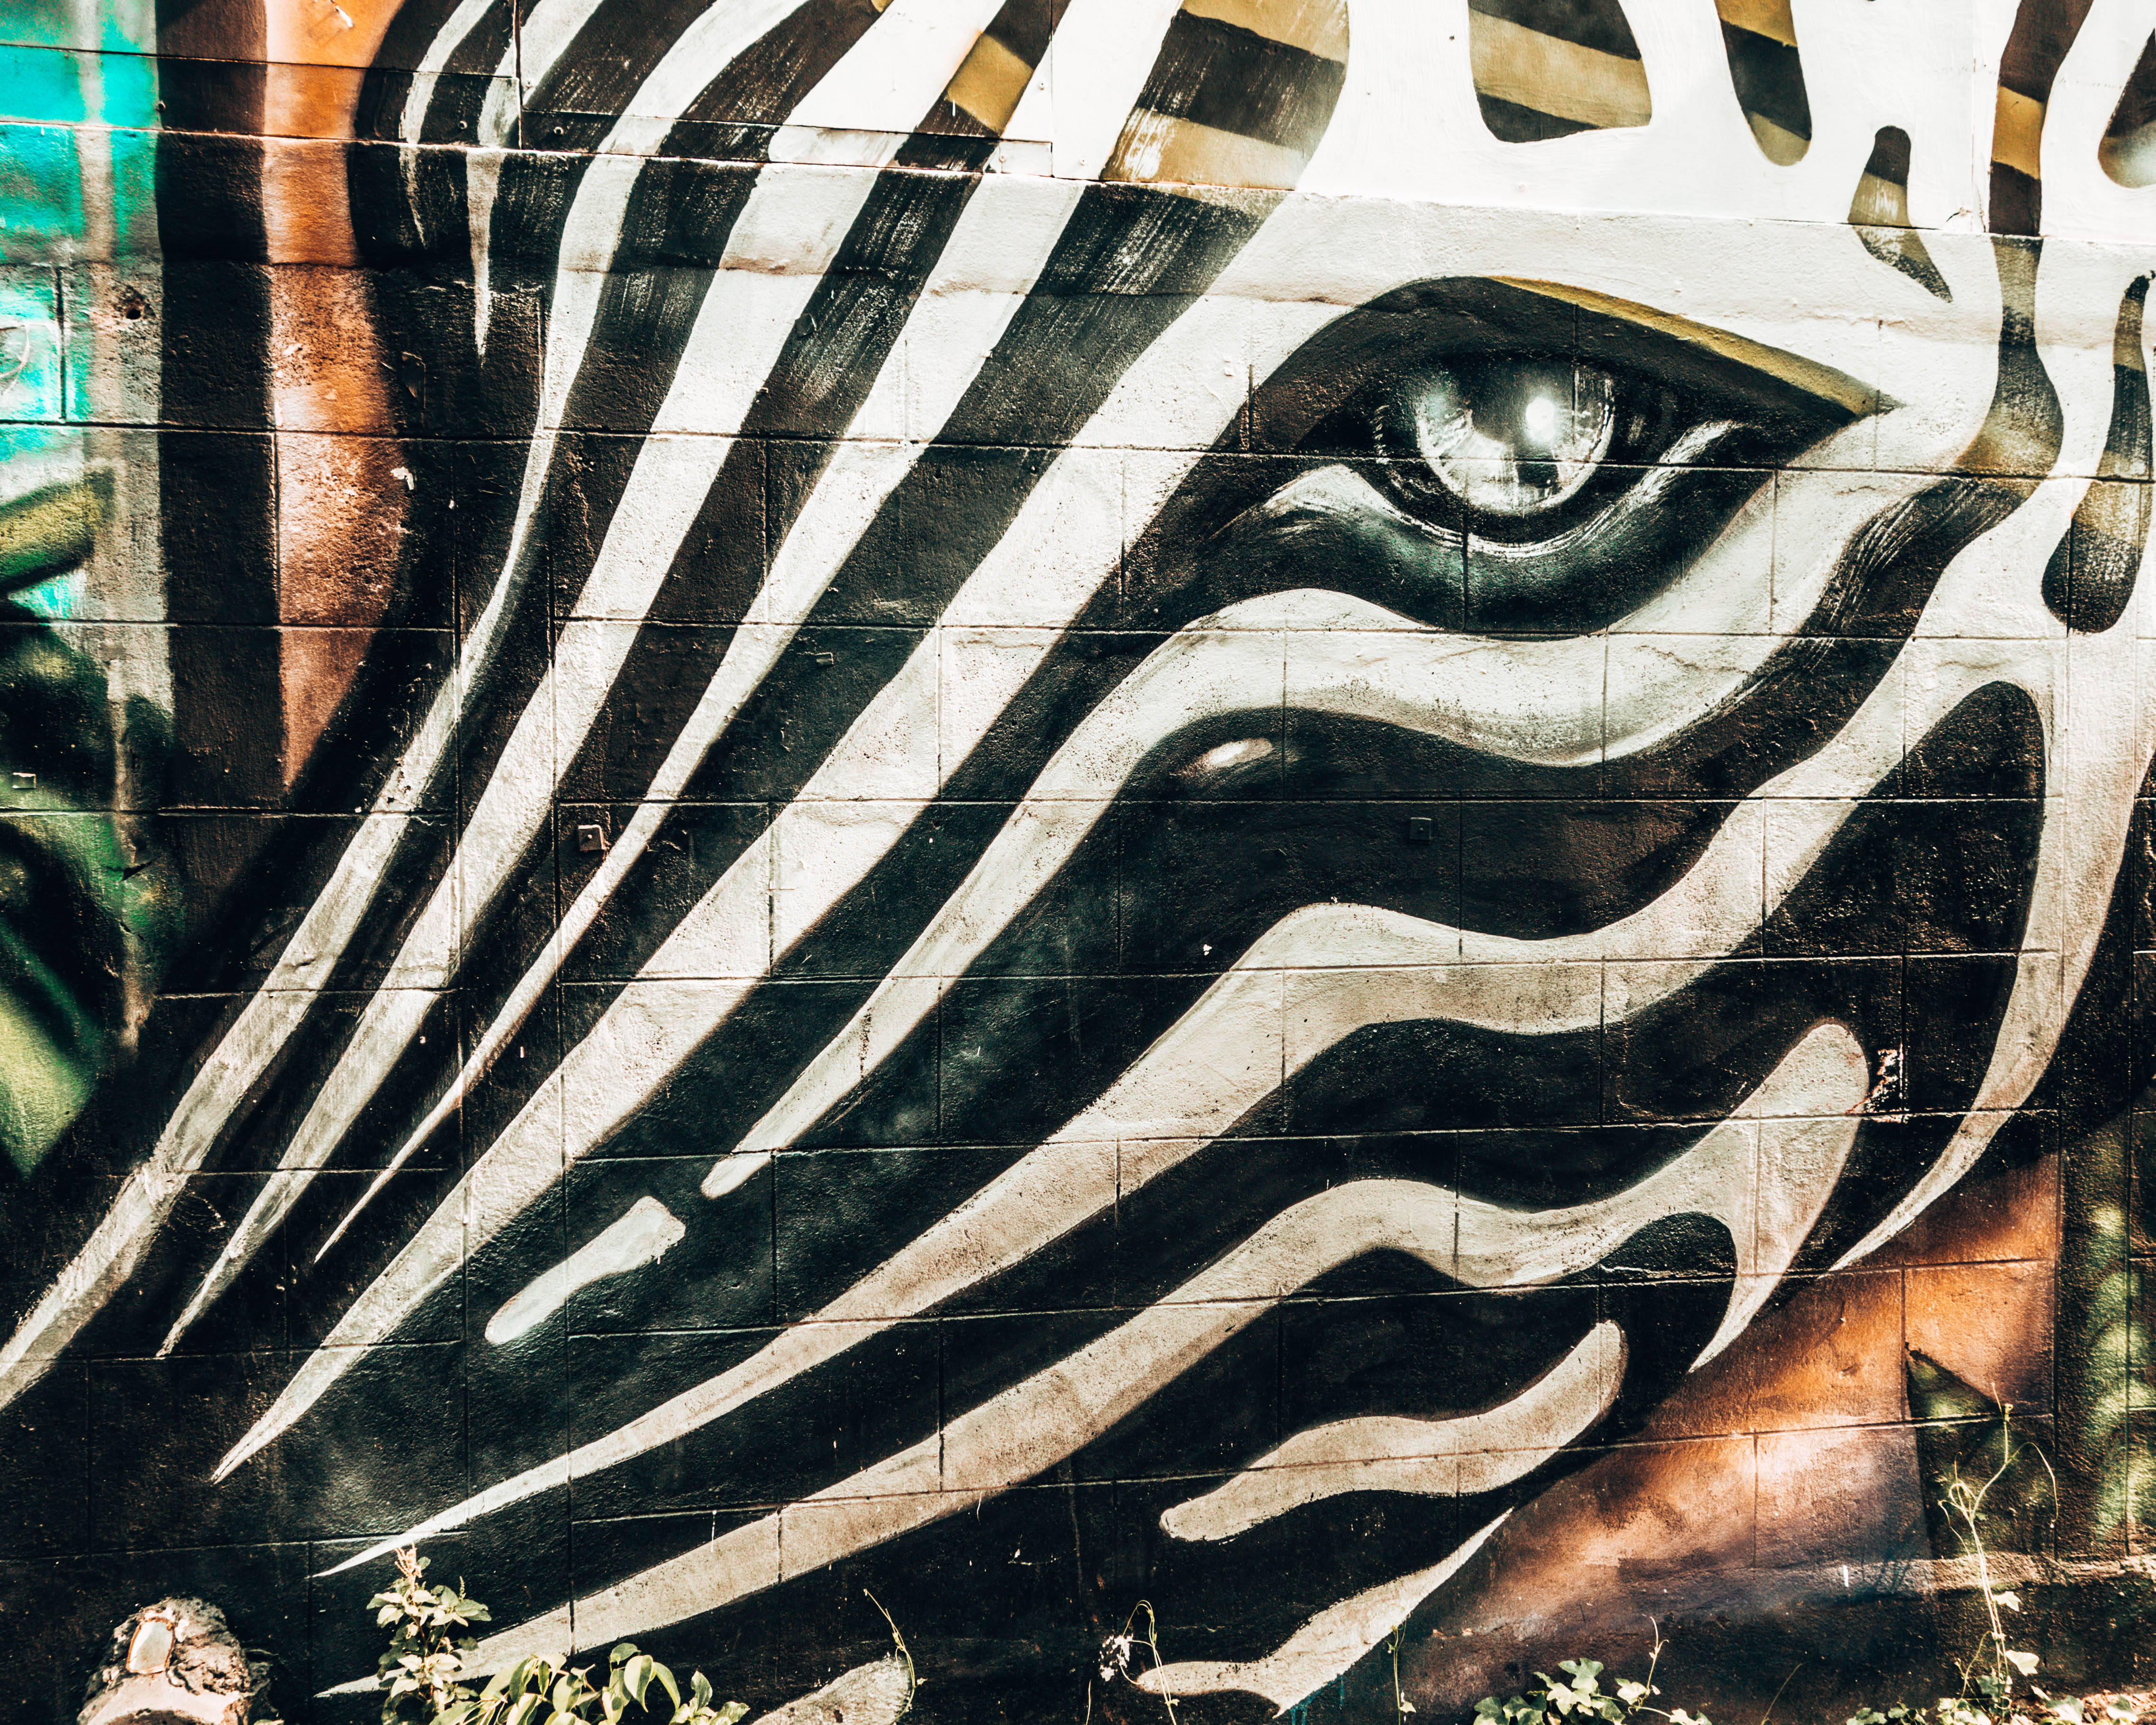 zebra mural in Chiang Mai - WeDidItOurWay.com